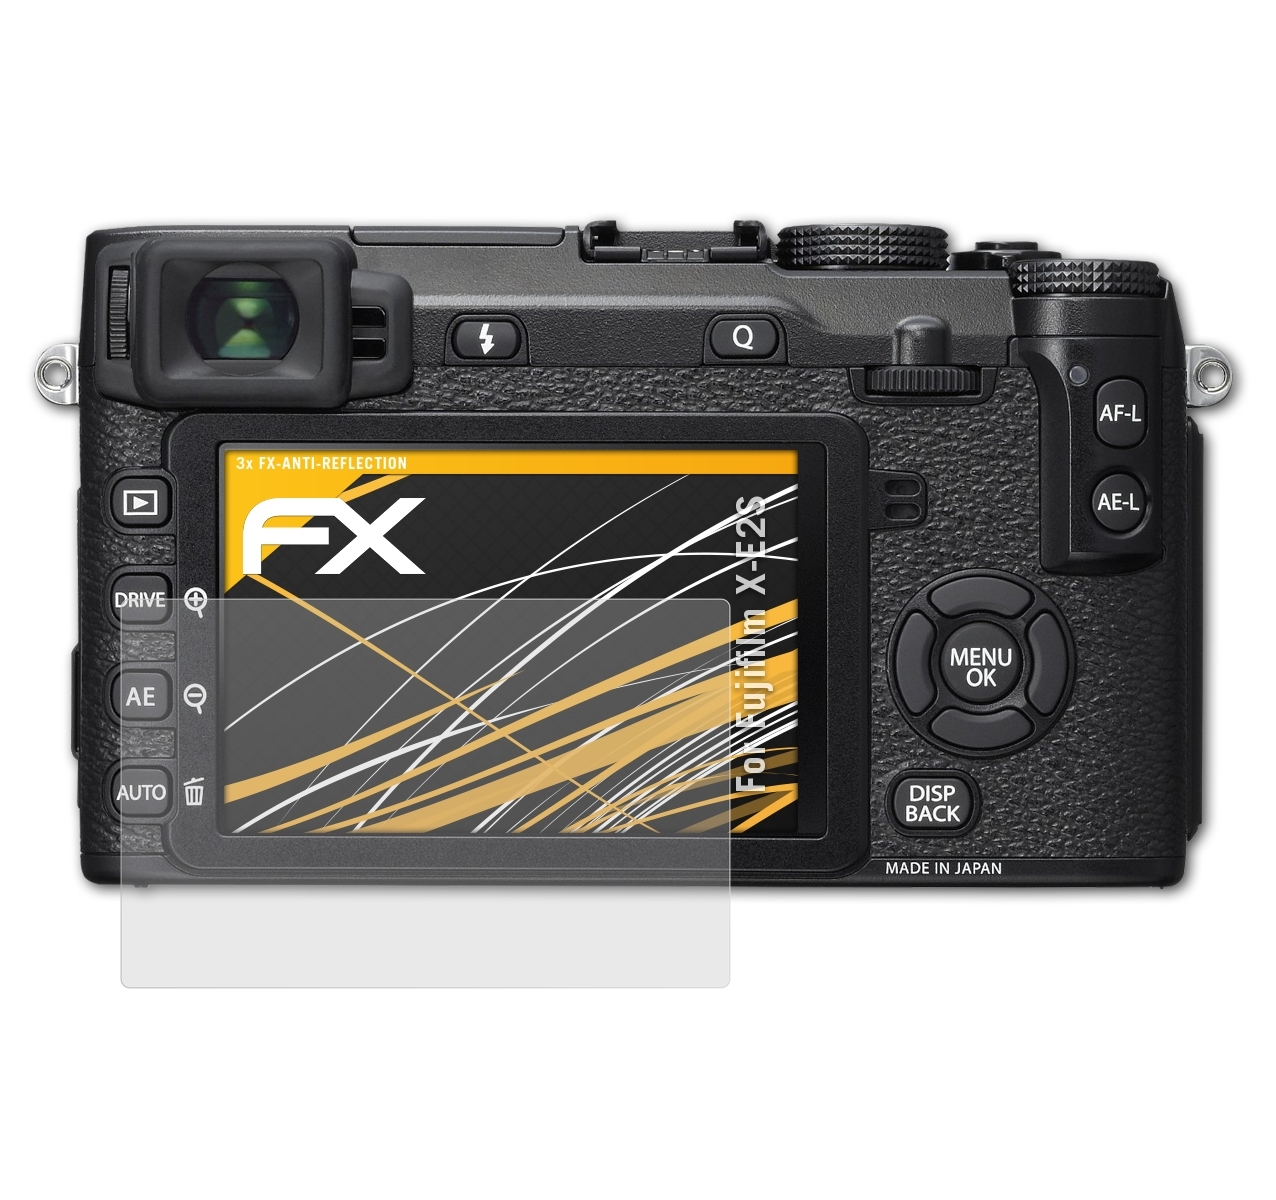 ATFOLIX 3x FX-Antireflex Displayschutz(für X-E2S) Fujifilm